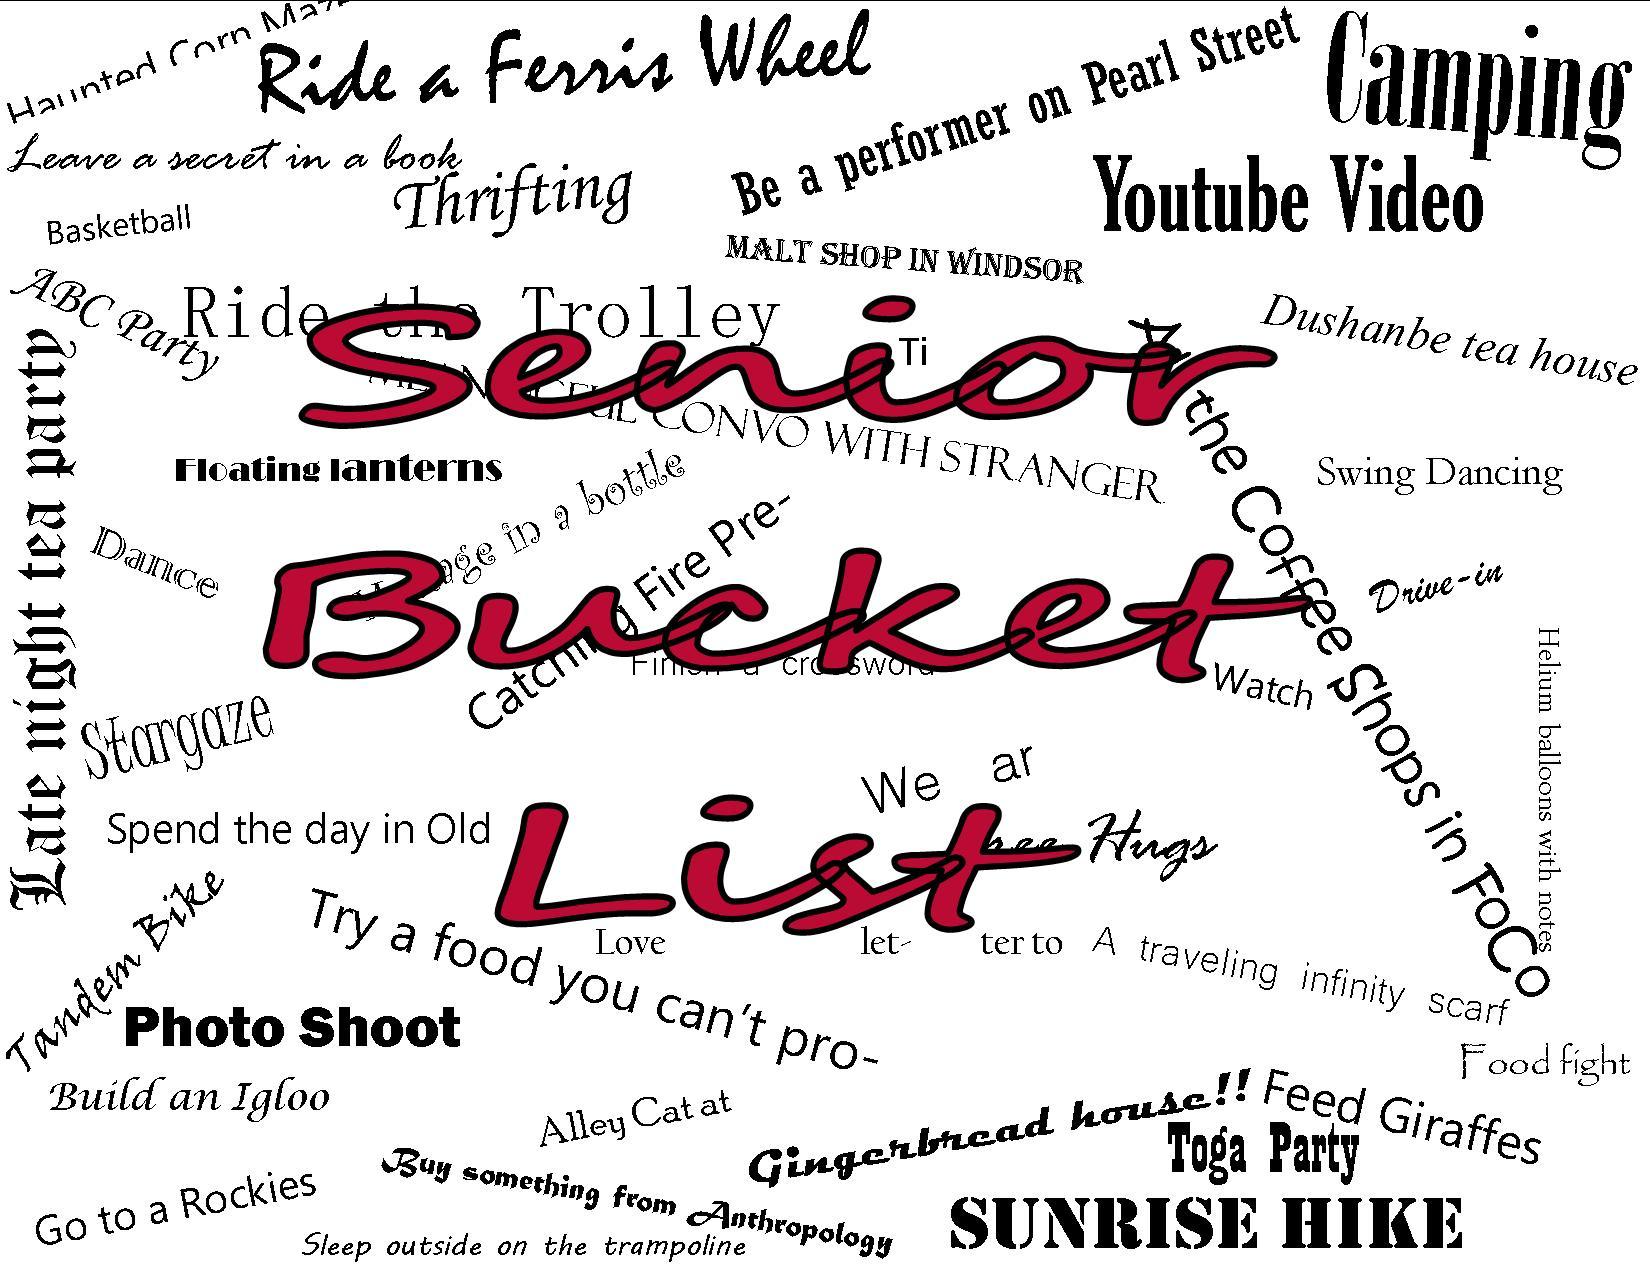 Senior bucket list: sporting events